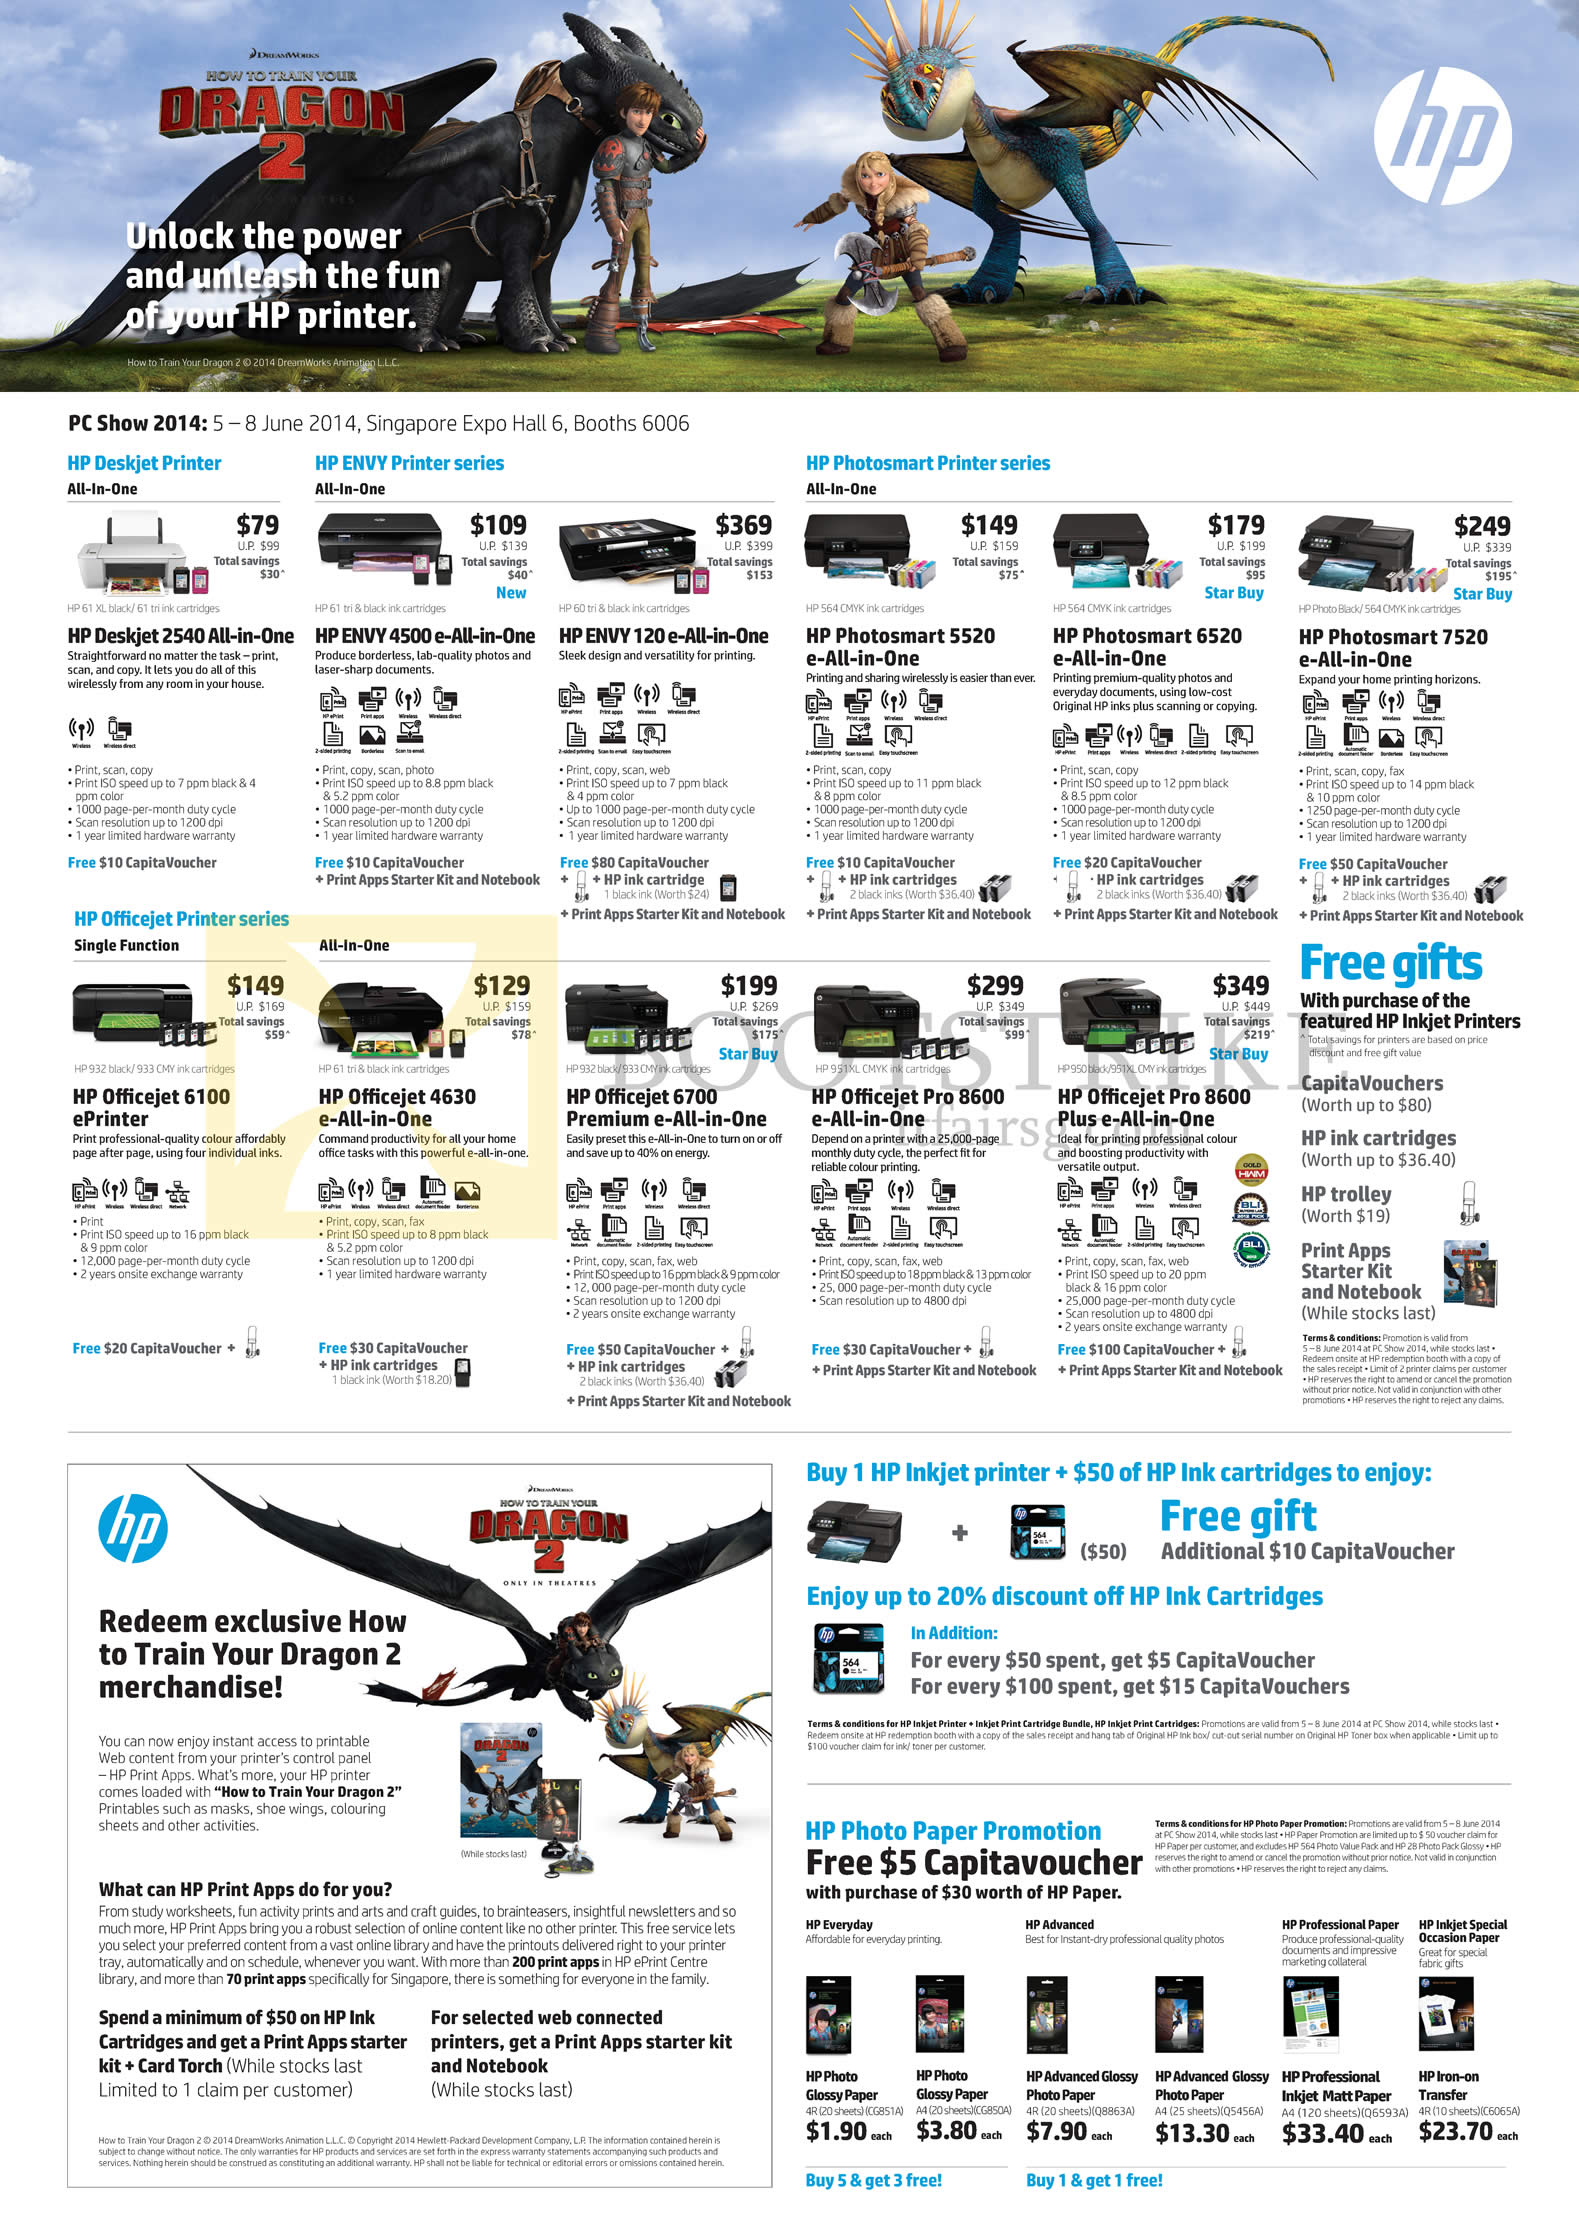 PC SHOW 2014 price list image brochure of HP Printers Deskjet Inkjet 2540, Envy 4500, 120, Photosmart 5520, 6520, 7520, Officejet 6700, Pro 8600